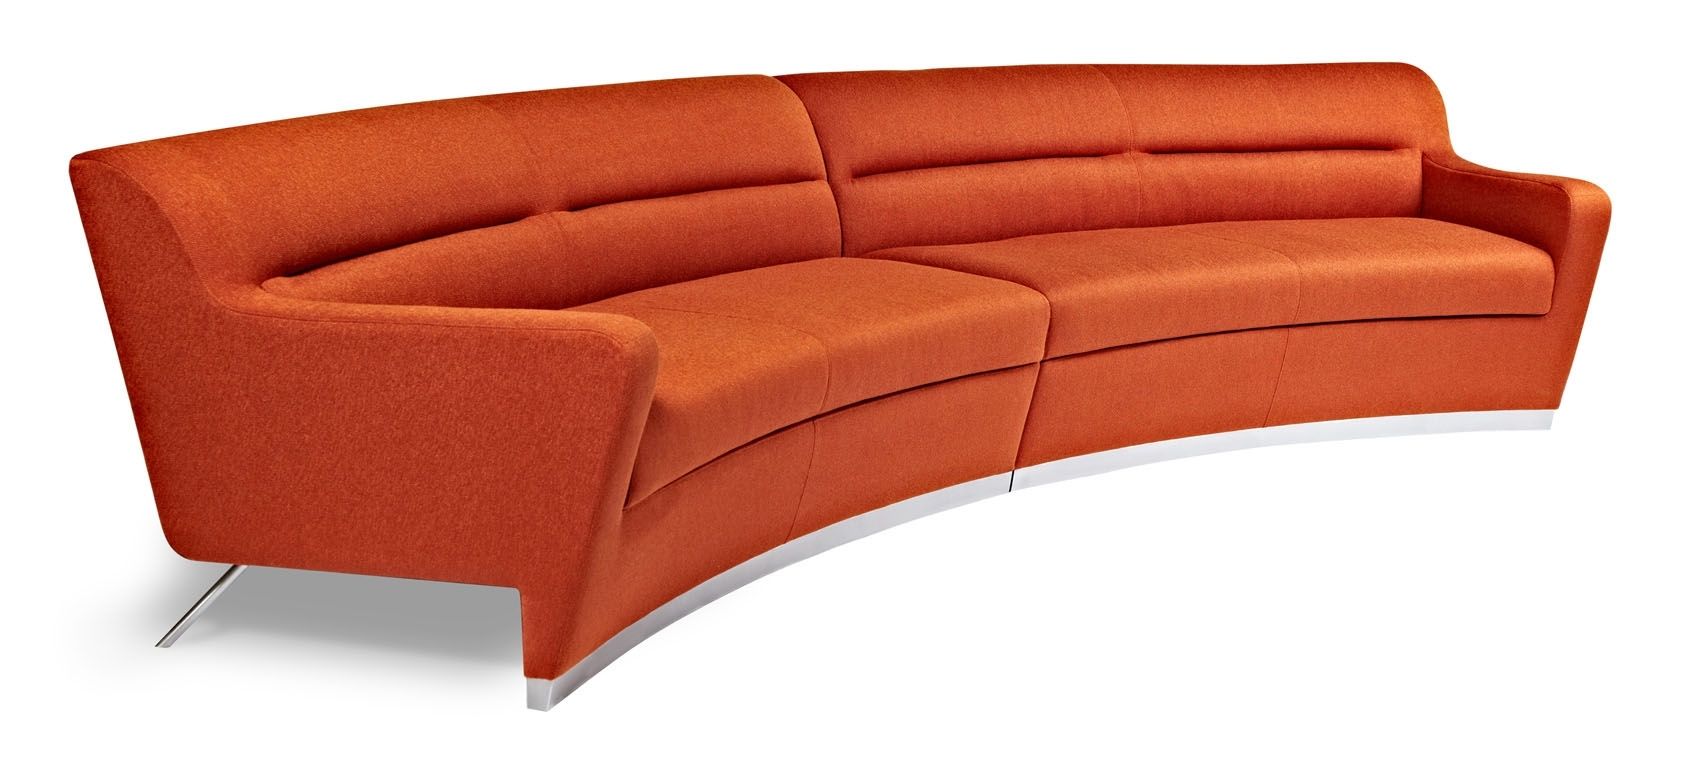 American Leather Niagara Sectional Sofa | Modern Furniture In Niagara Sectional Sofas (Photo 4 of 10)